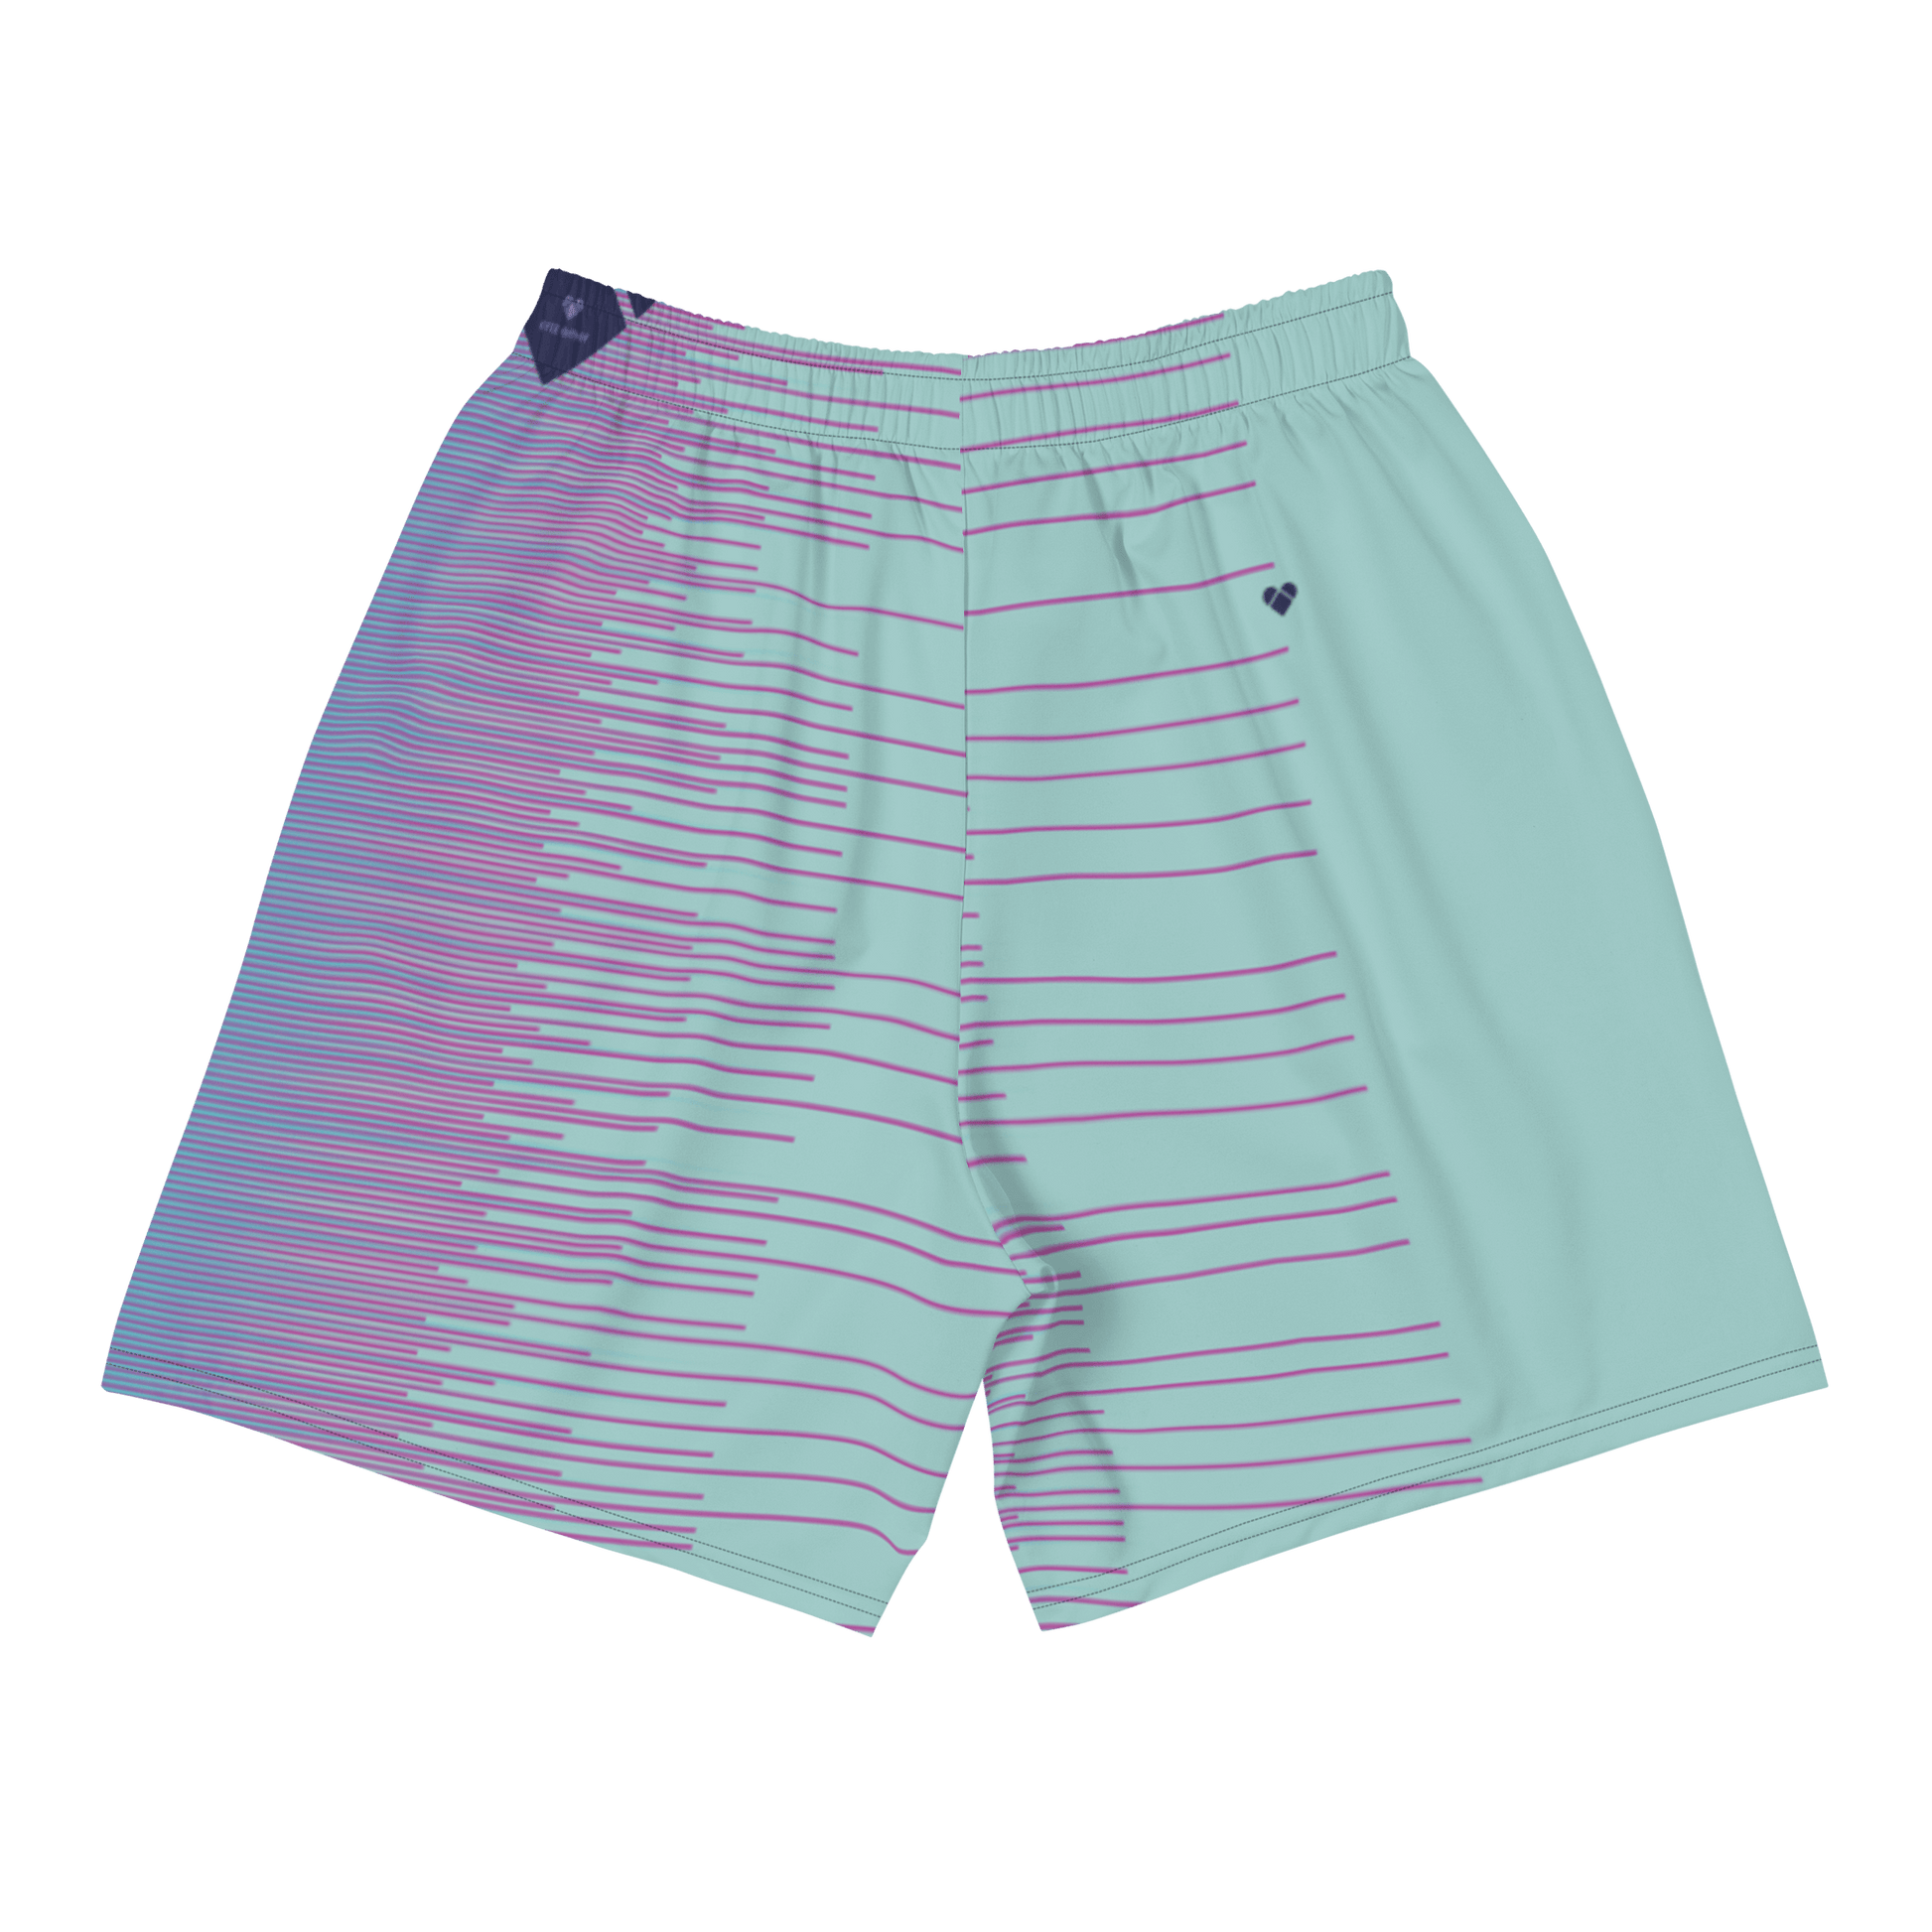 Unique Mint and Fucsia Pink Striped Sporty Design